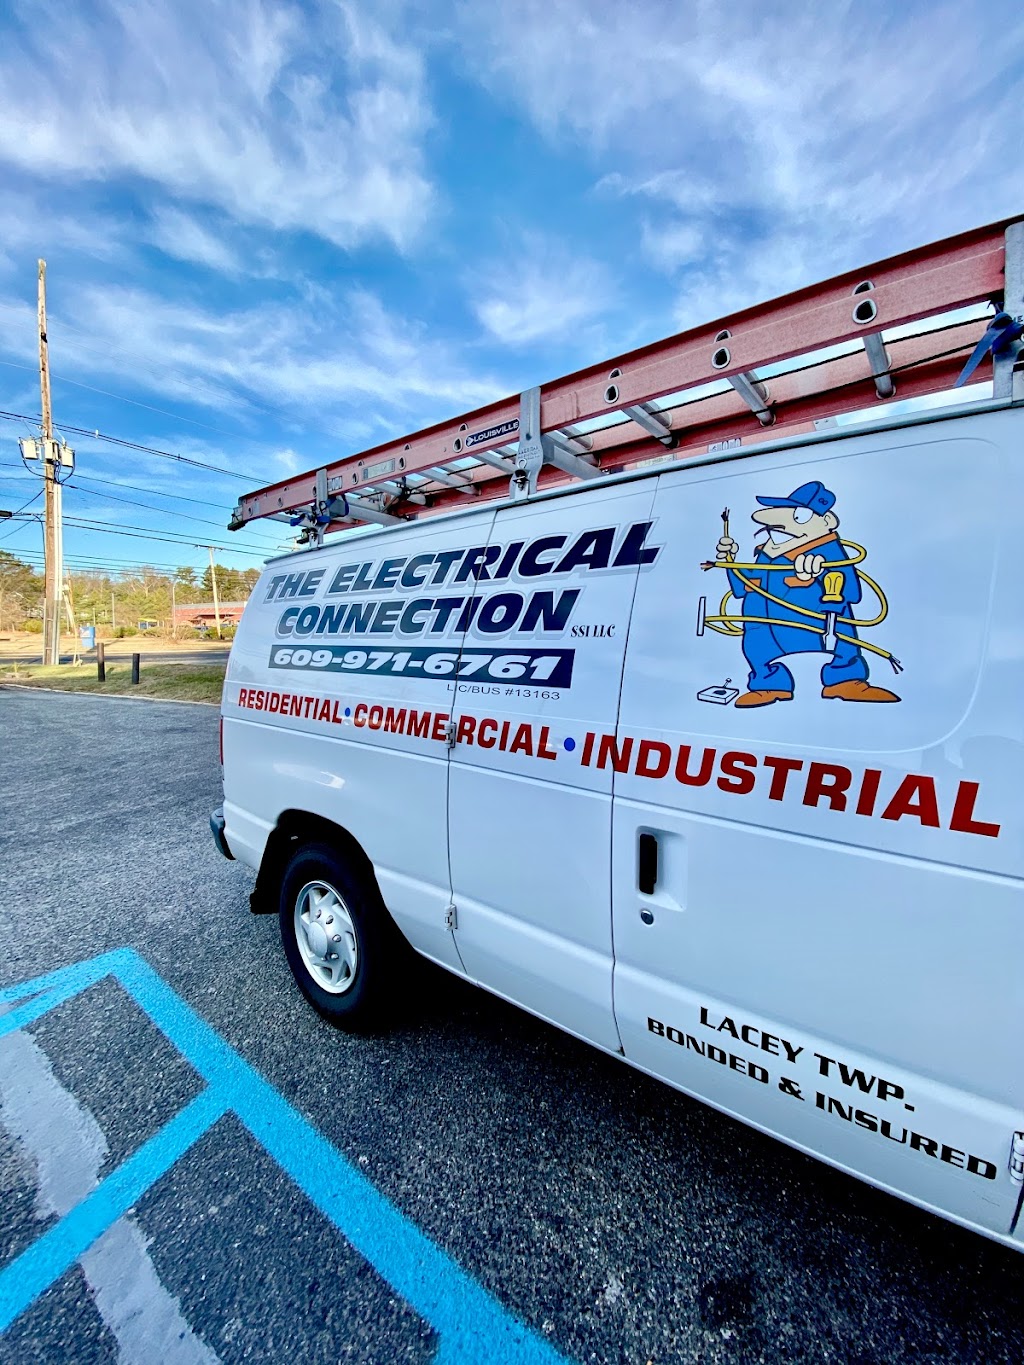 Electrical Connection | 1013 Sarasota Dr, Forked River, NJ 08731 | Phone: (609) 971-6761